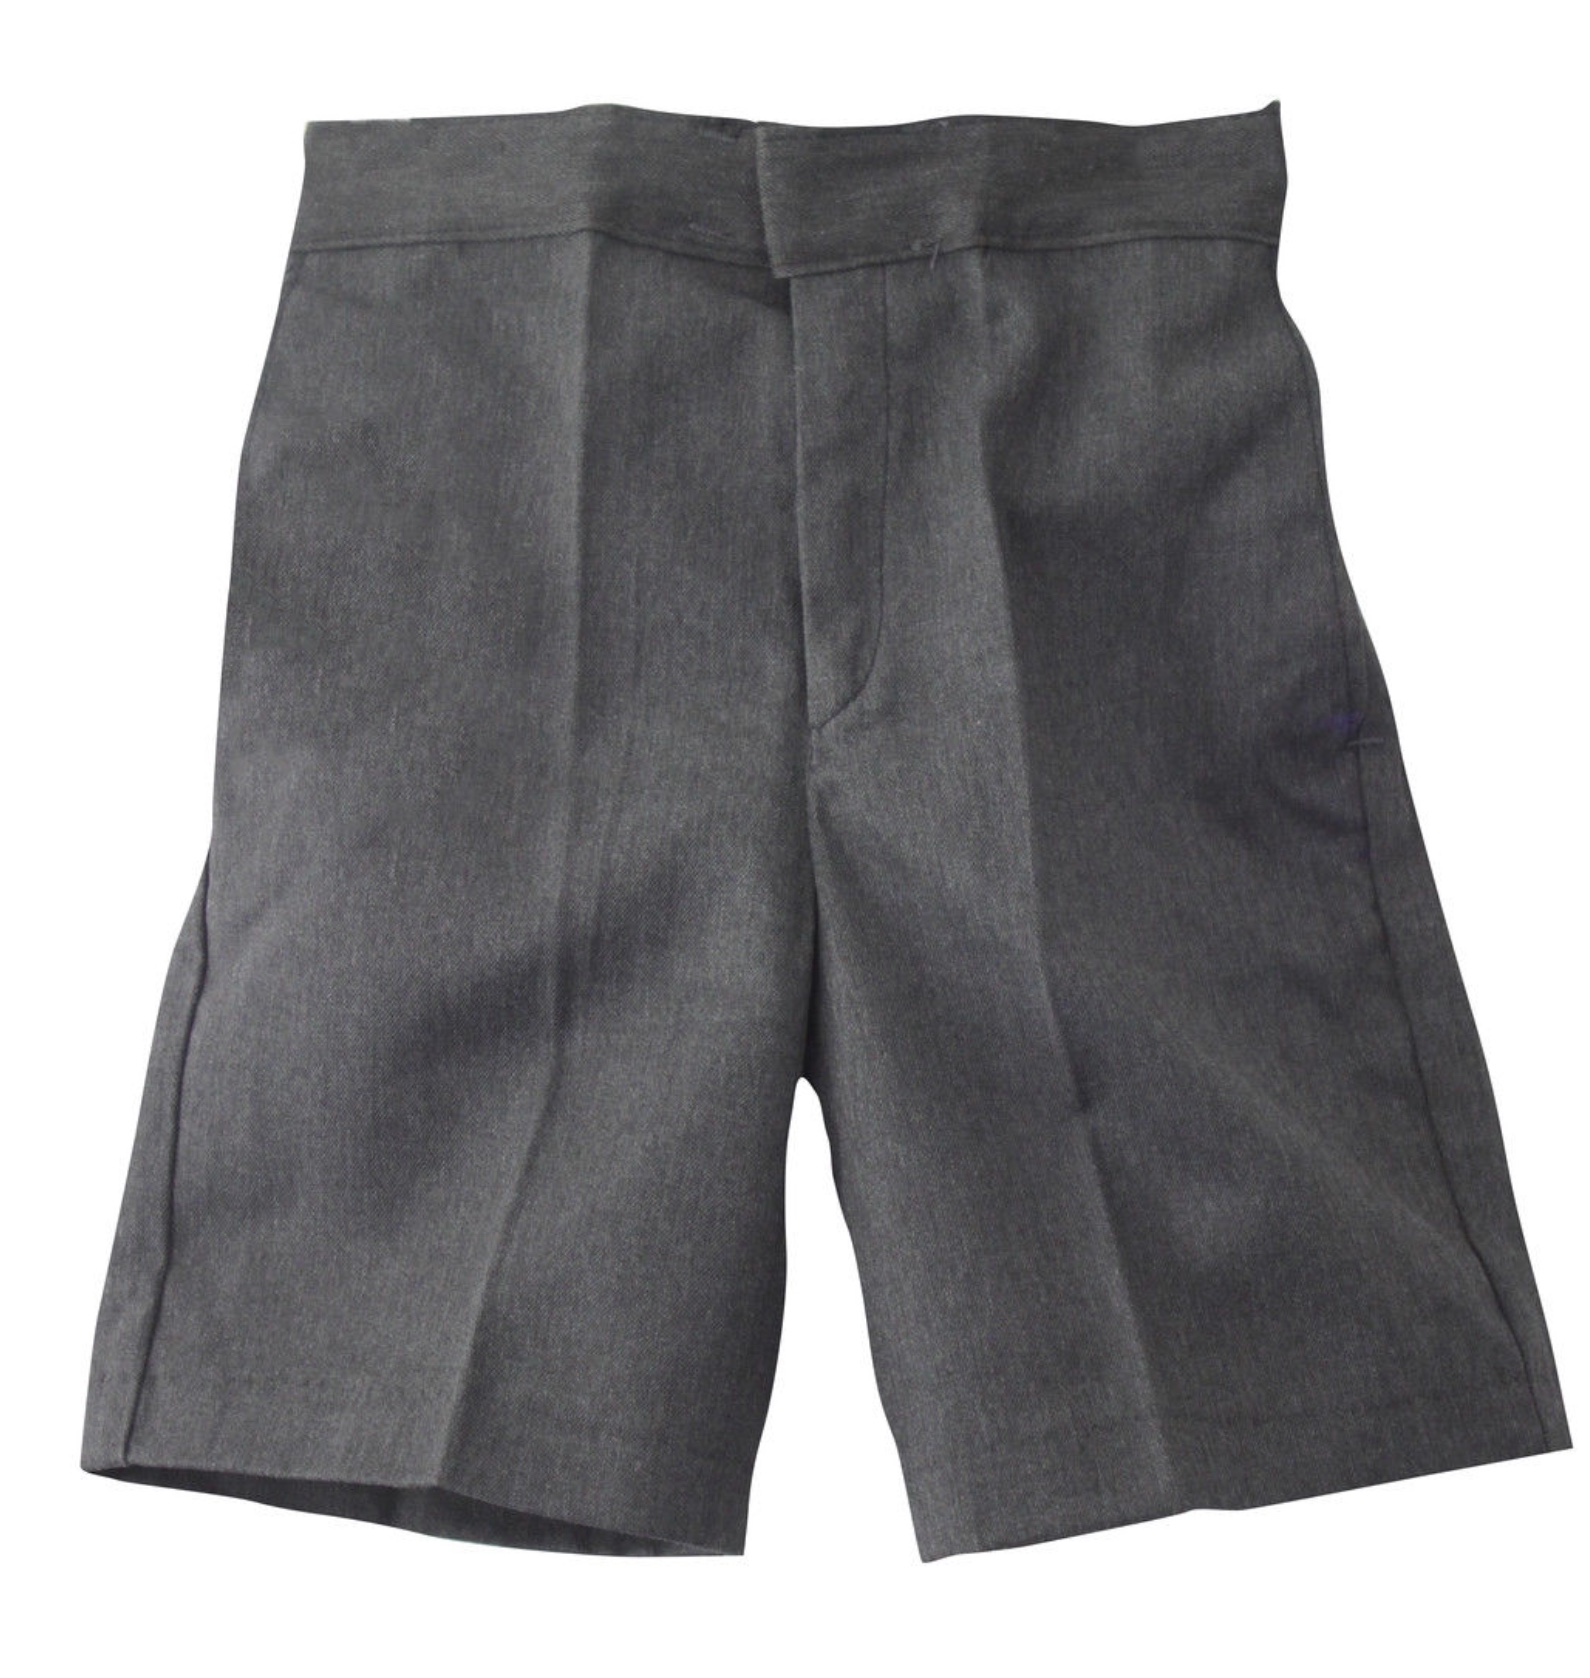 Boys' Dark Grey Shorts, Flat Front, Adjustable Waist, Zip fly, Side and Back Pockets 3-4 Y